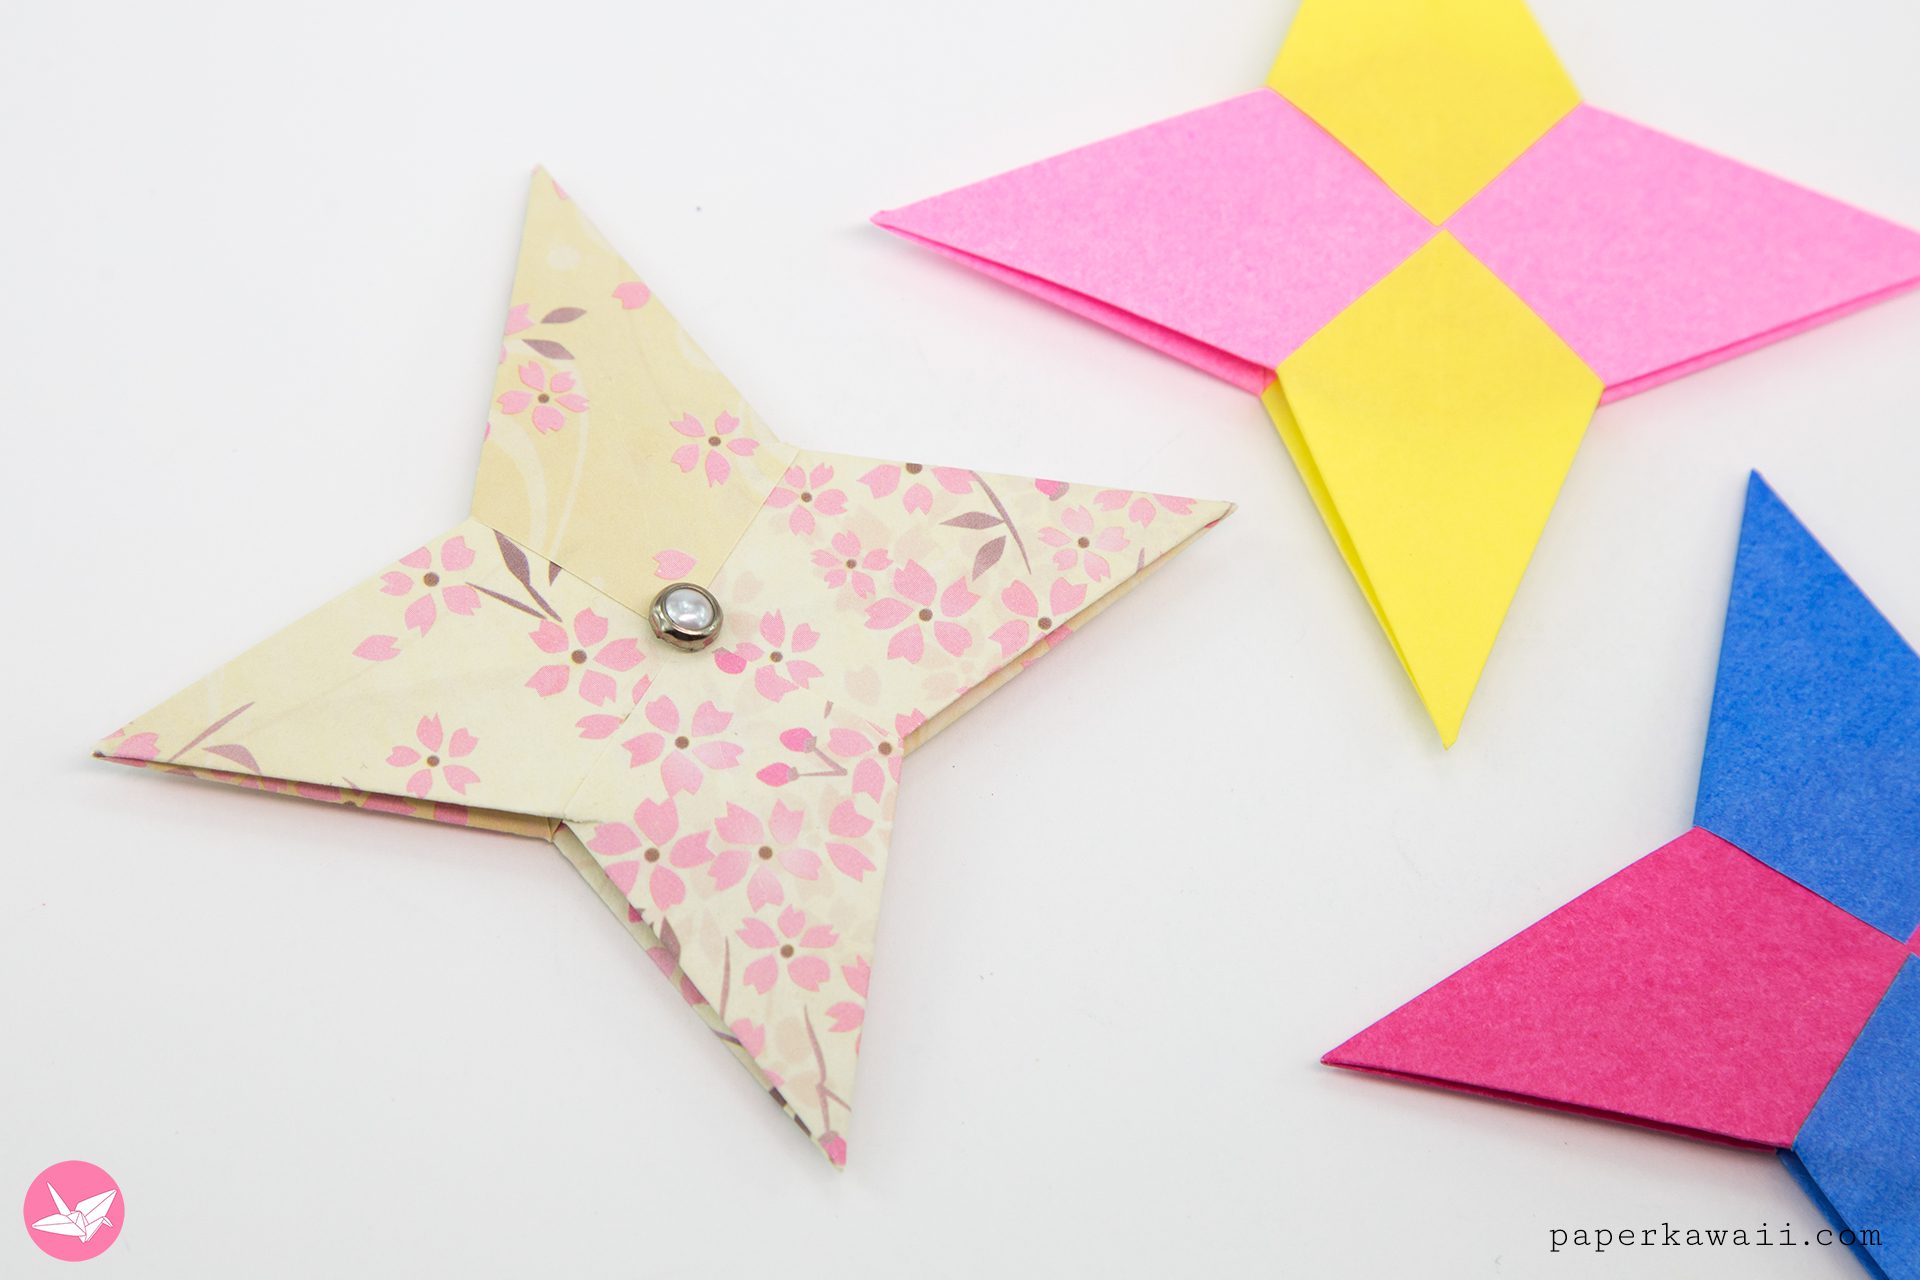 Symetrical Shuriken Origami Star Paper Kawaii 02